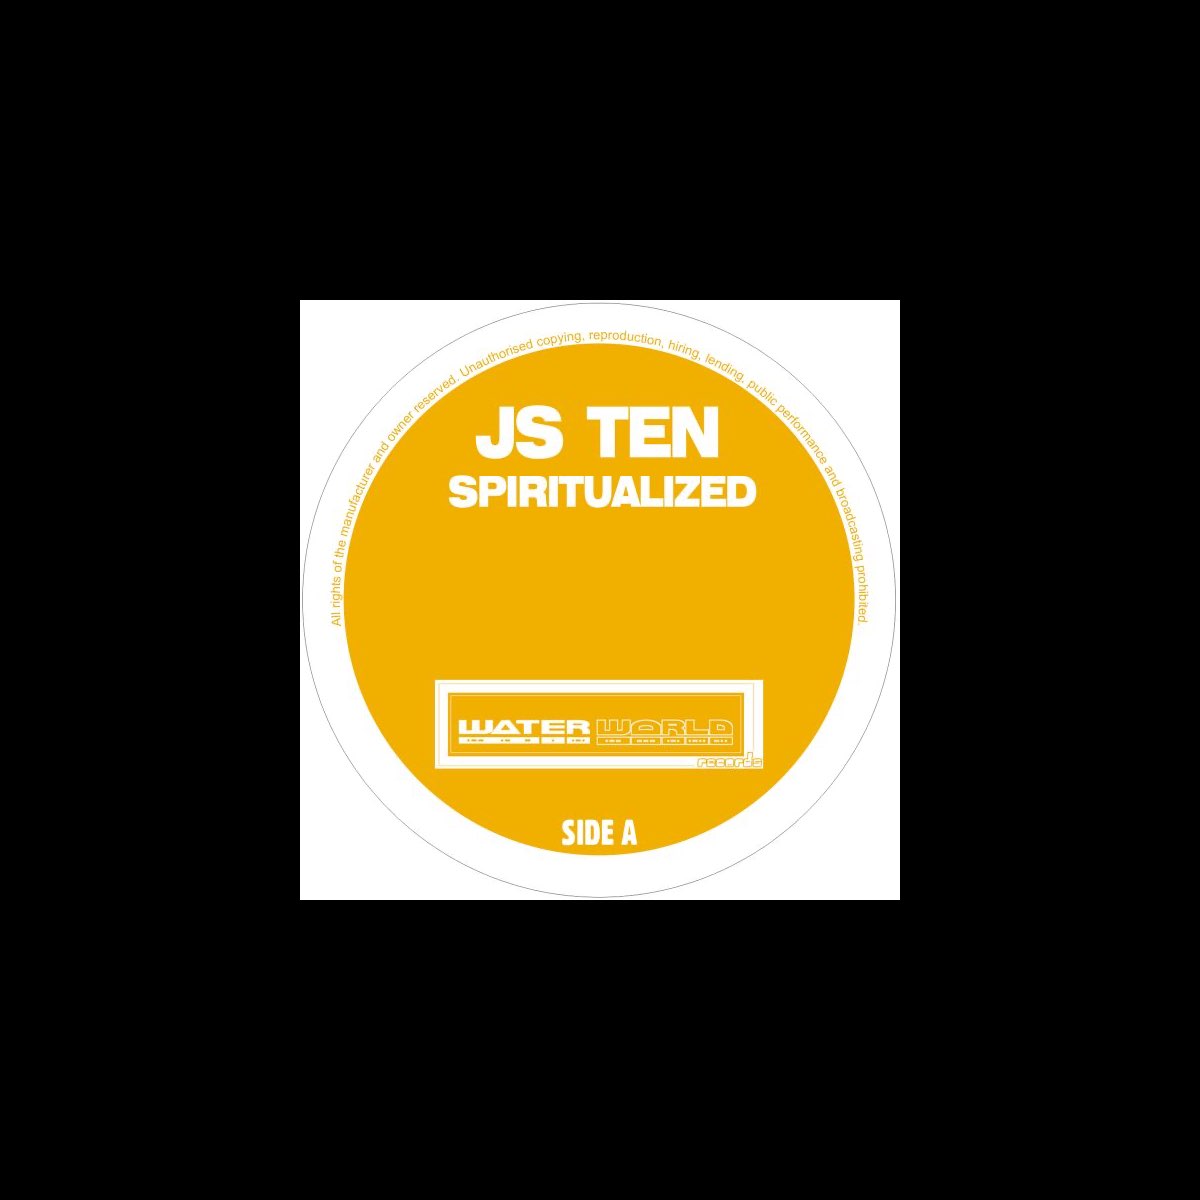 Spiritualized - Single by JS Ten on Apple Music